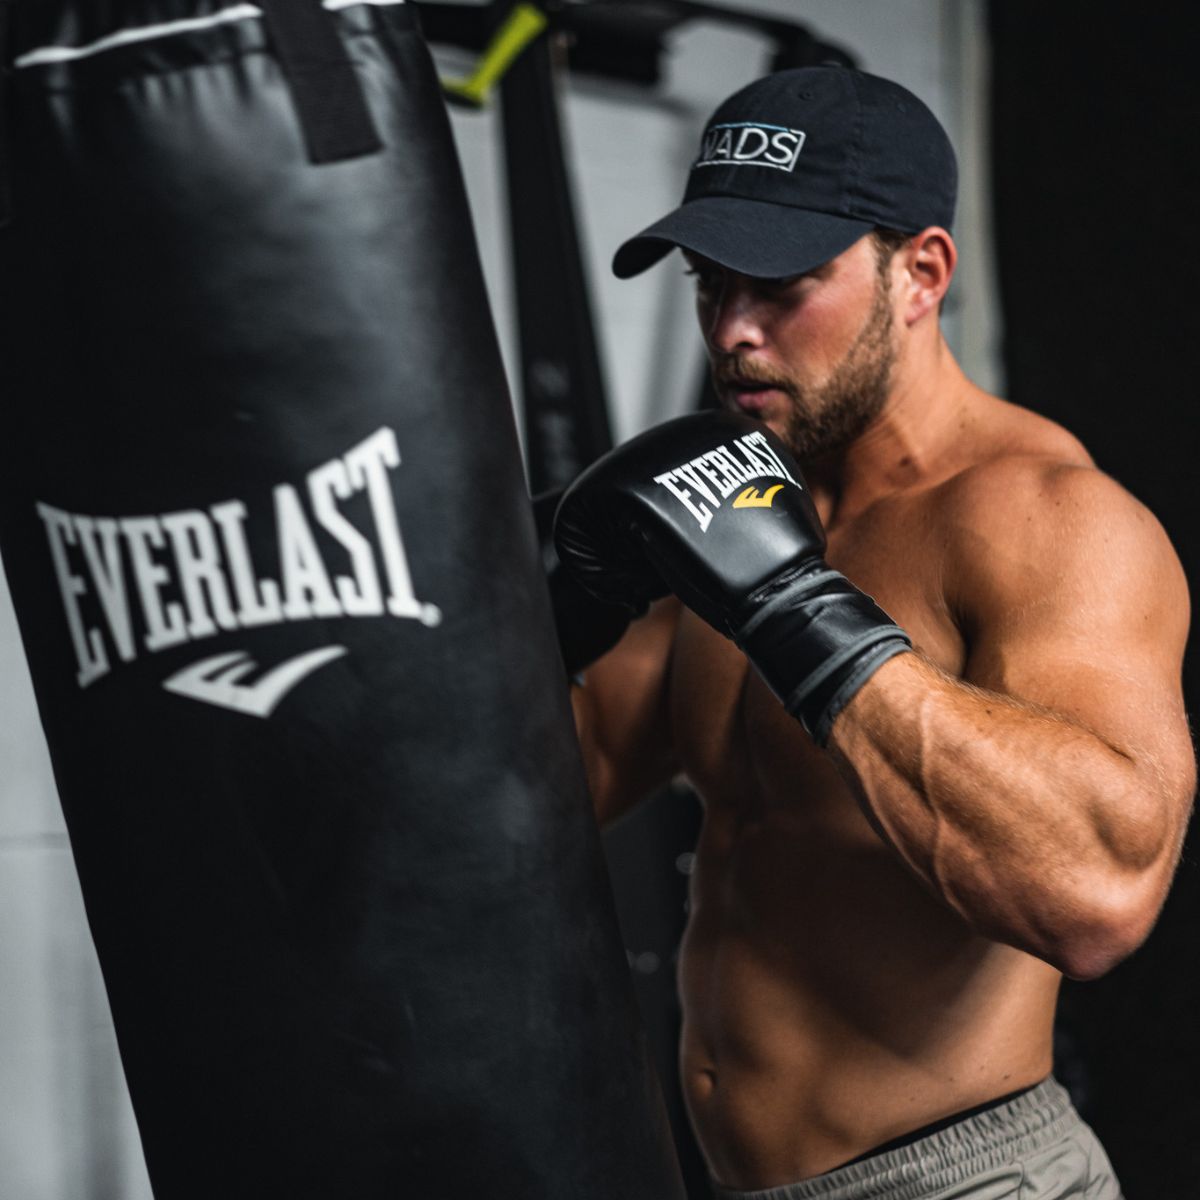 Active model shot of athlete boxing in non-toxic organic men's underwear